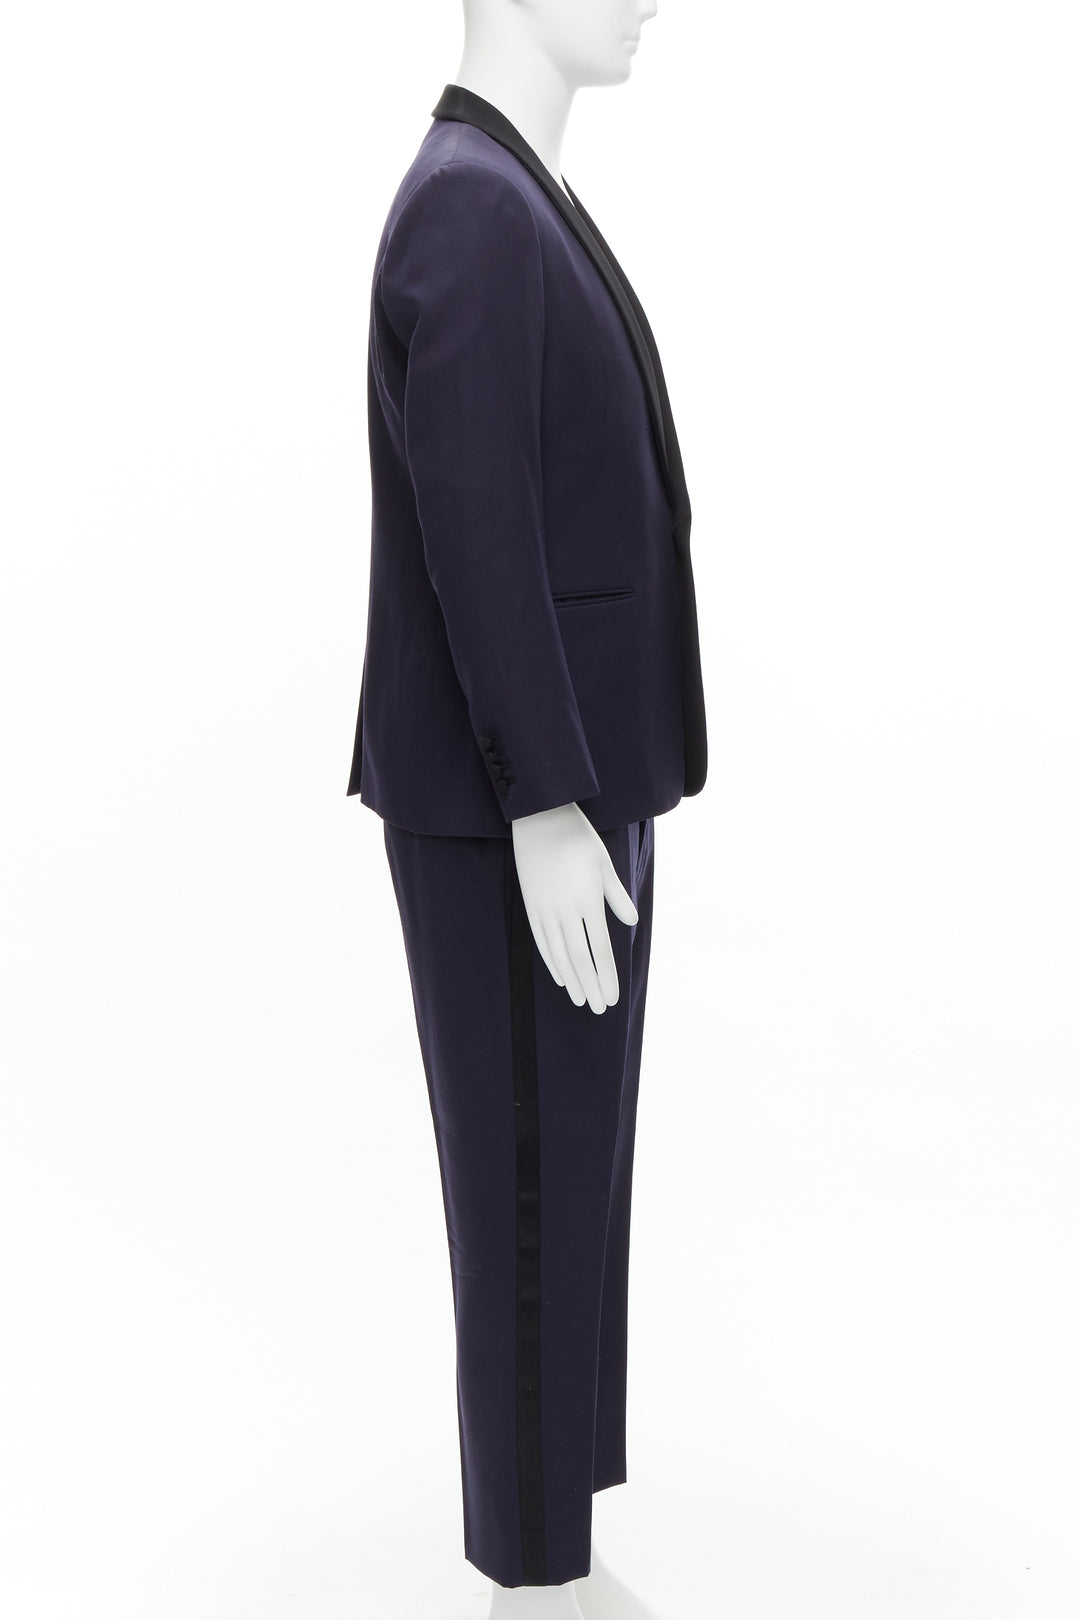 SAINT LAURENT virgin wool navy classic satin shawl collar tux blazer suit EU50 L